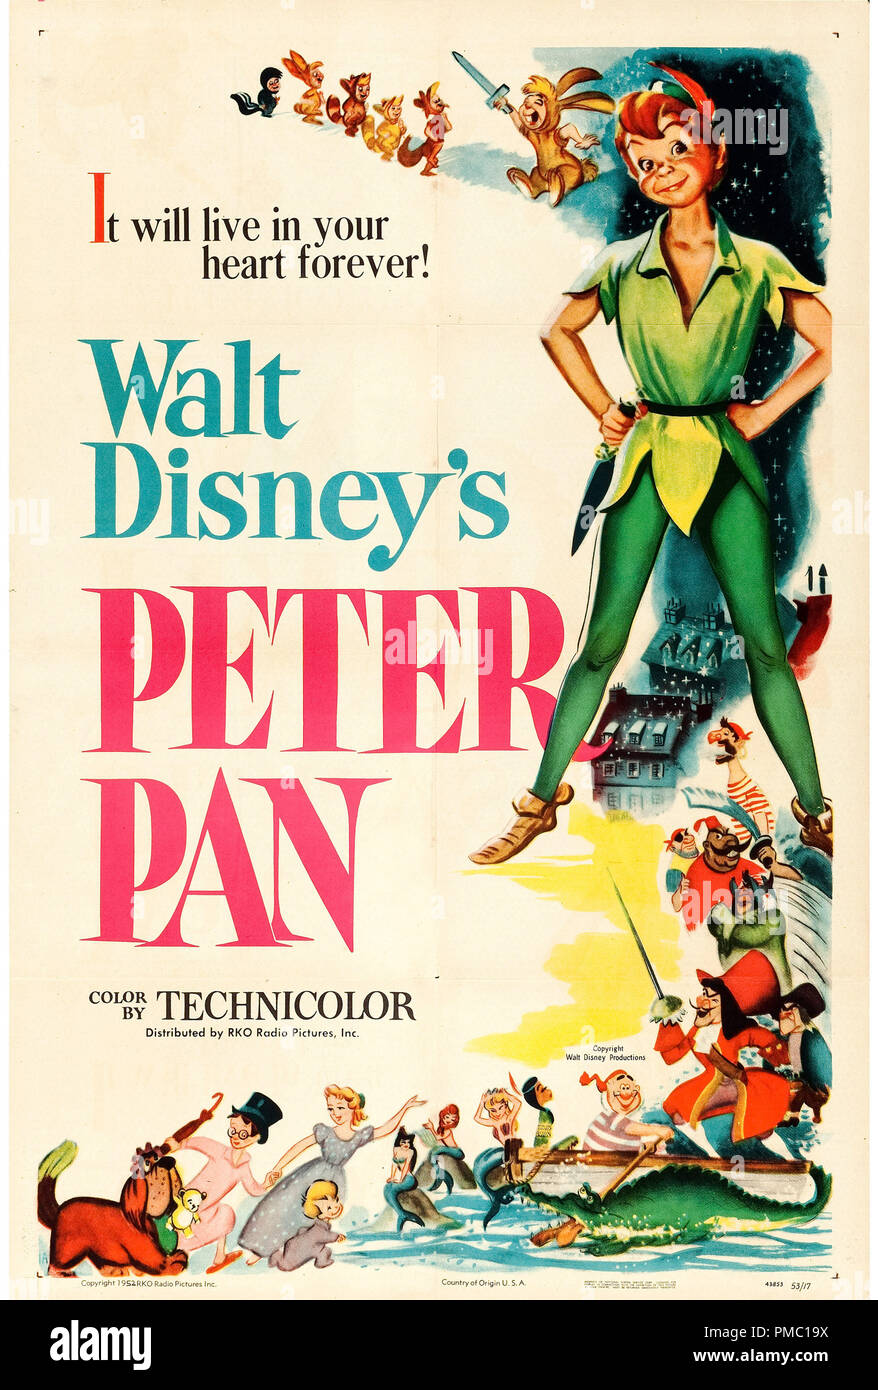 Peter pan cartoon movie film hi-res stock photography and images - Alamy